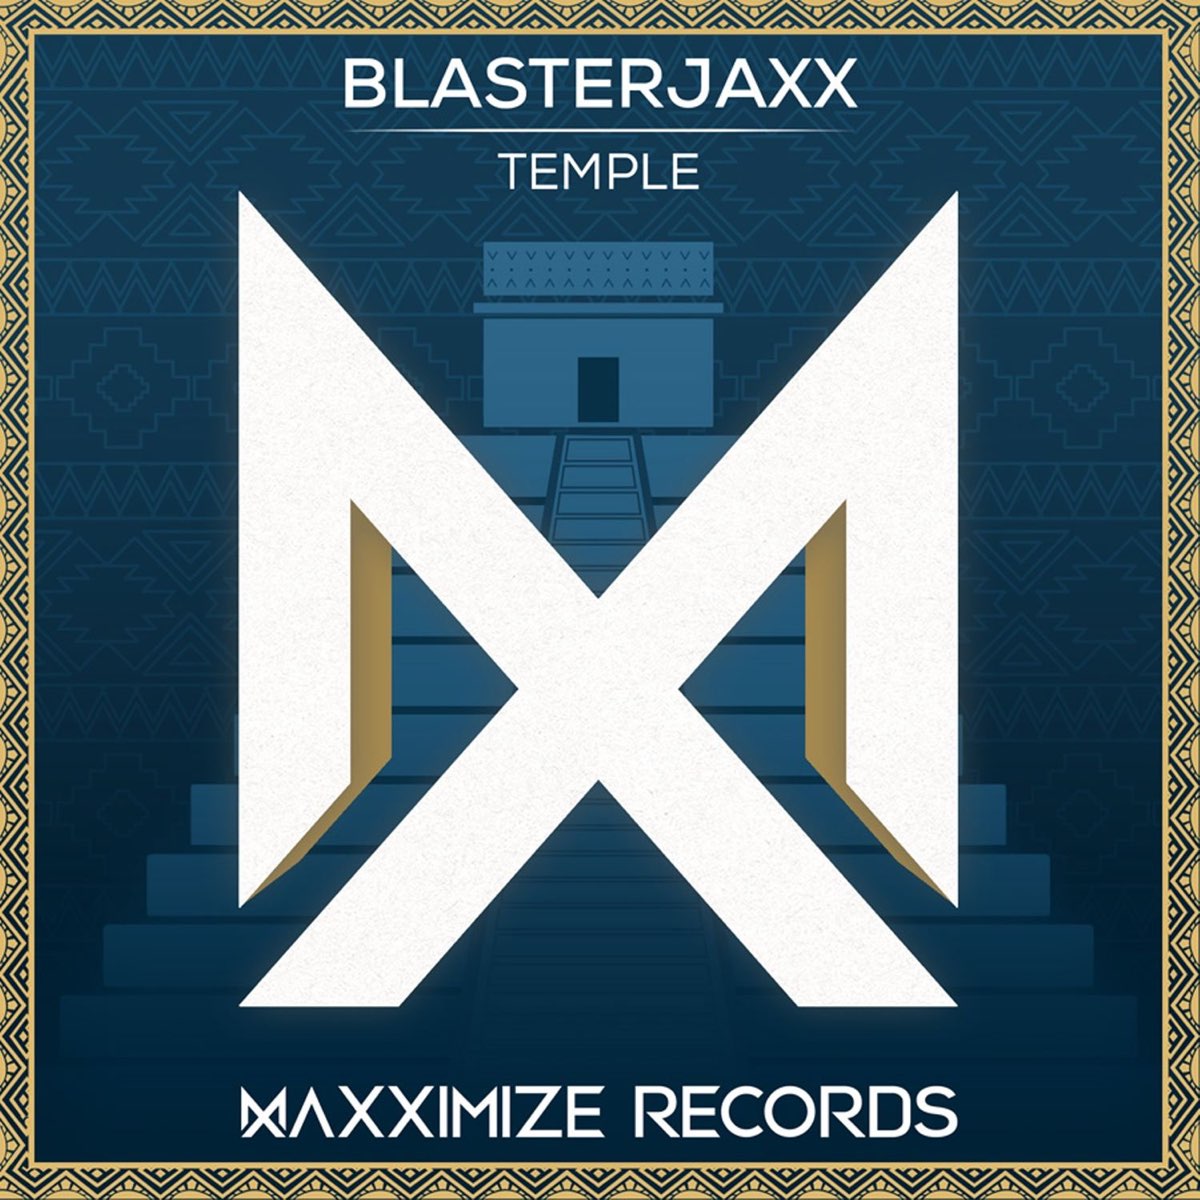 Temple текст. Blasterjaxx Band. Maxximize records. Blasterjaxx Maxximize records. Blasterjaxx logo.